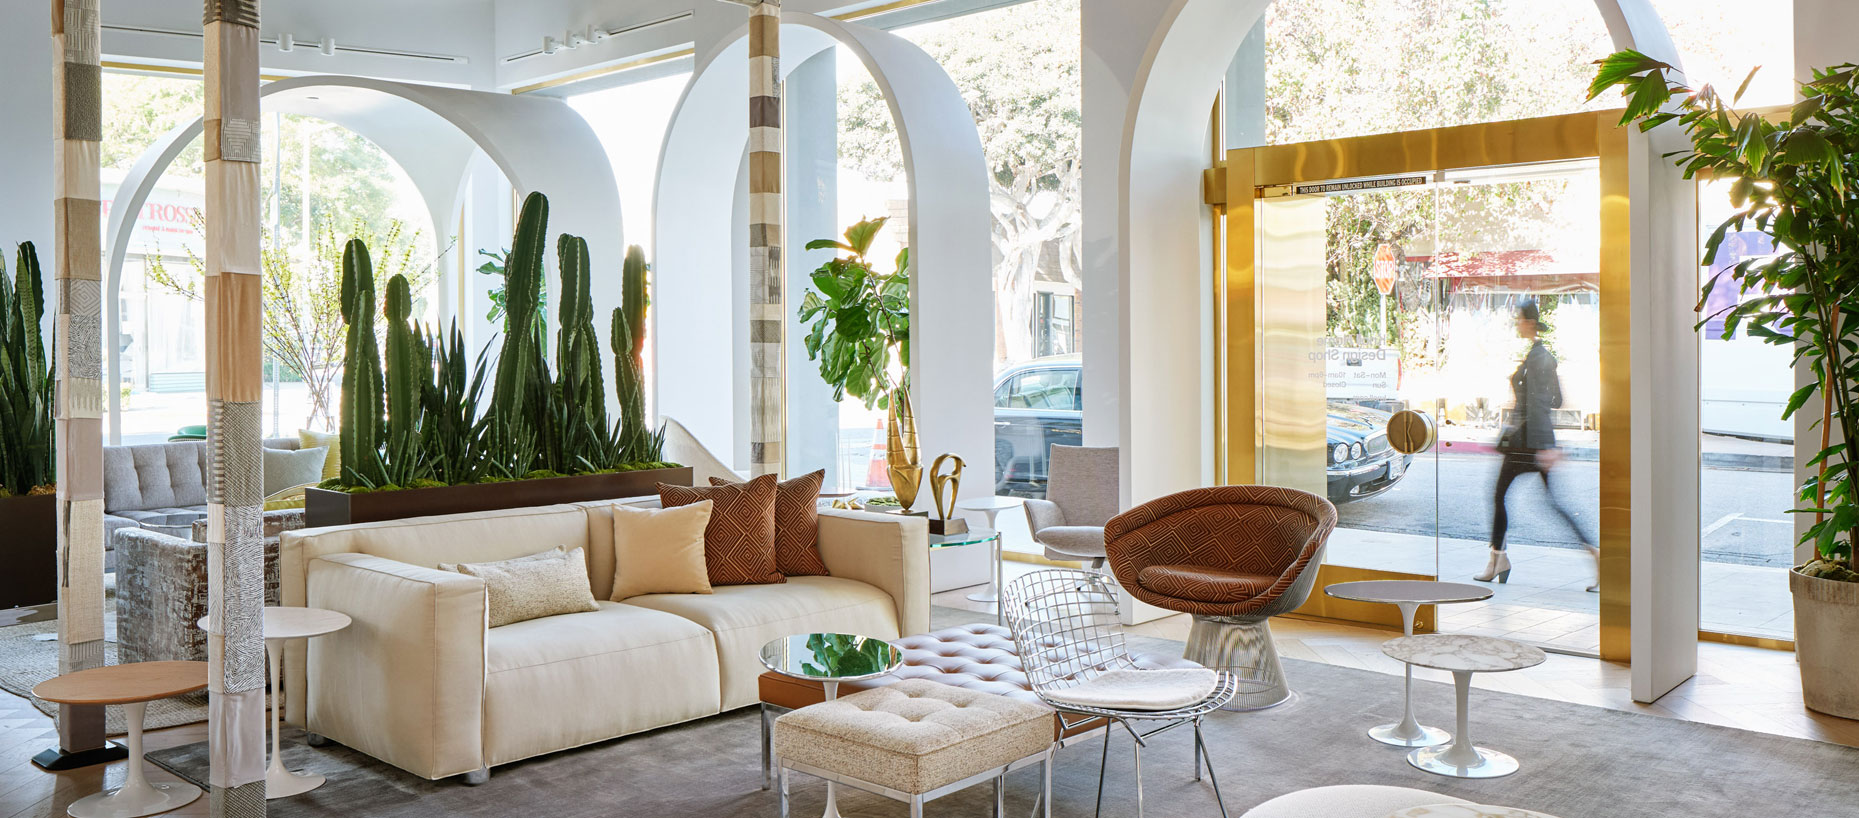 Knoll Los Angeles Home Design Shop Hero Image